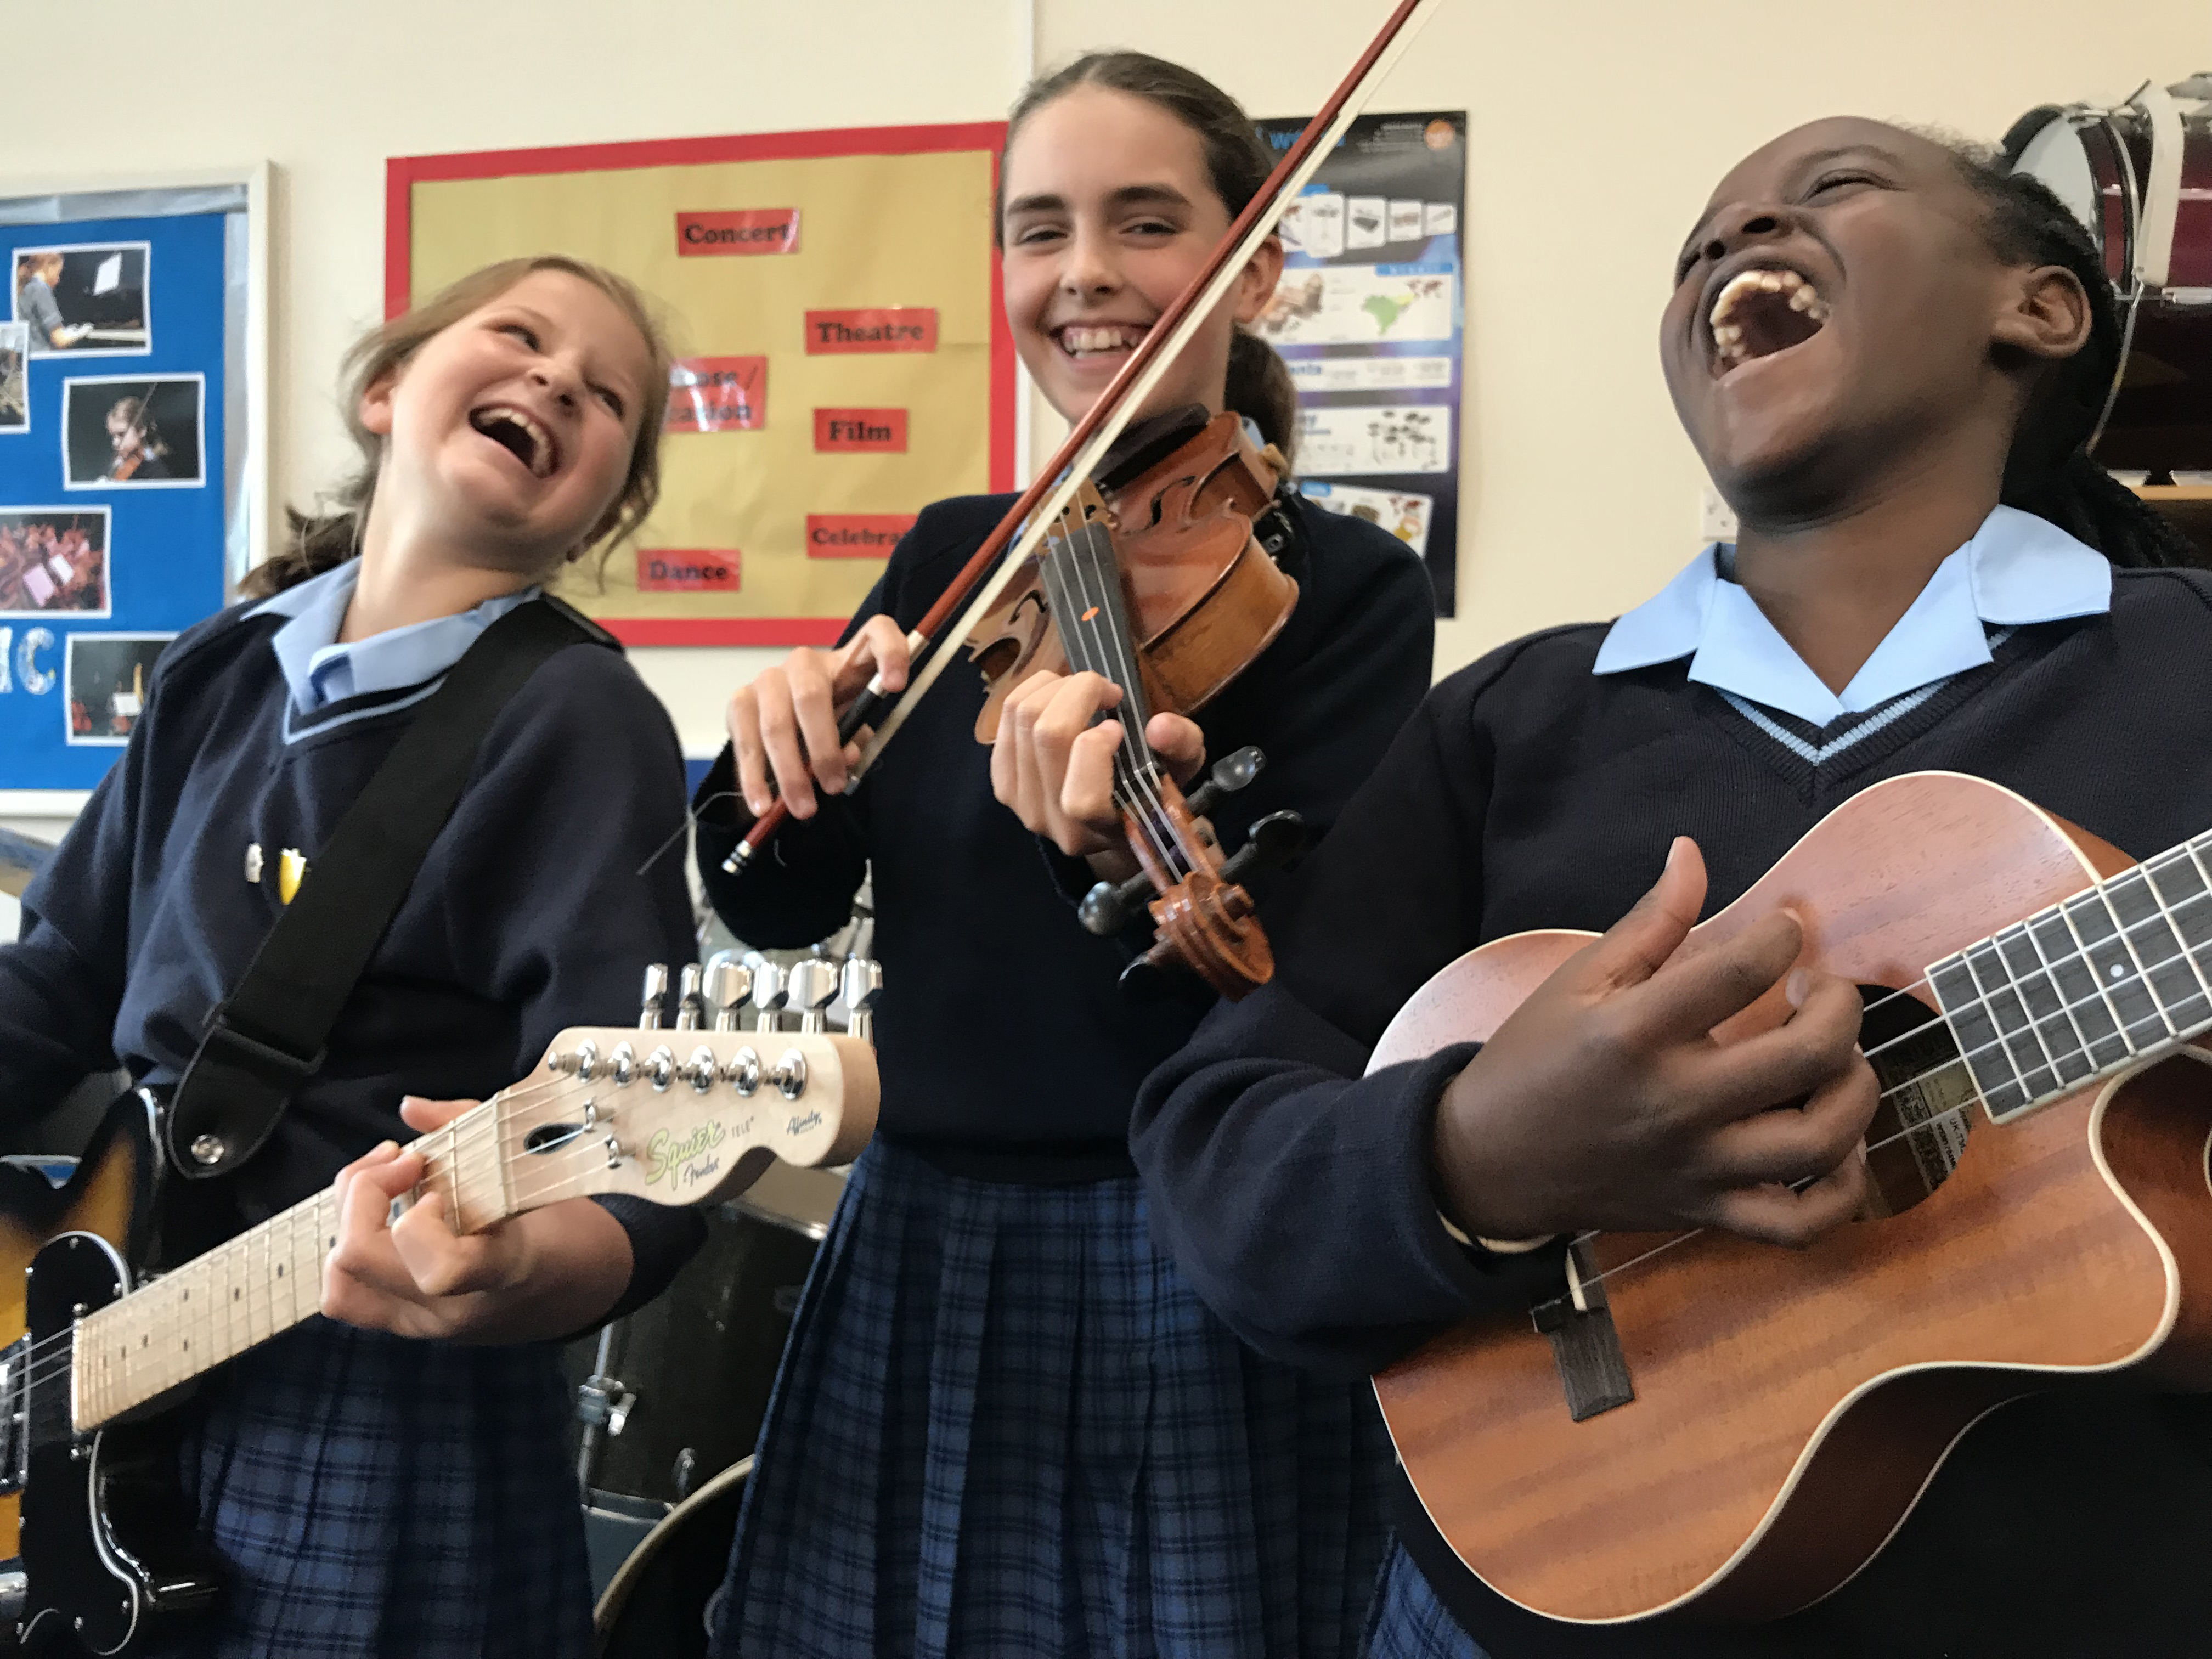 nottingham girls' high school students playing instruments